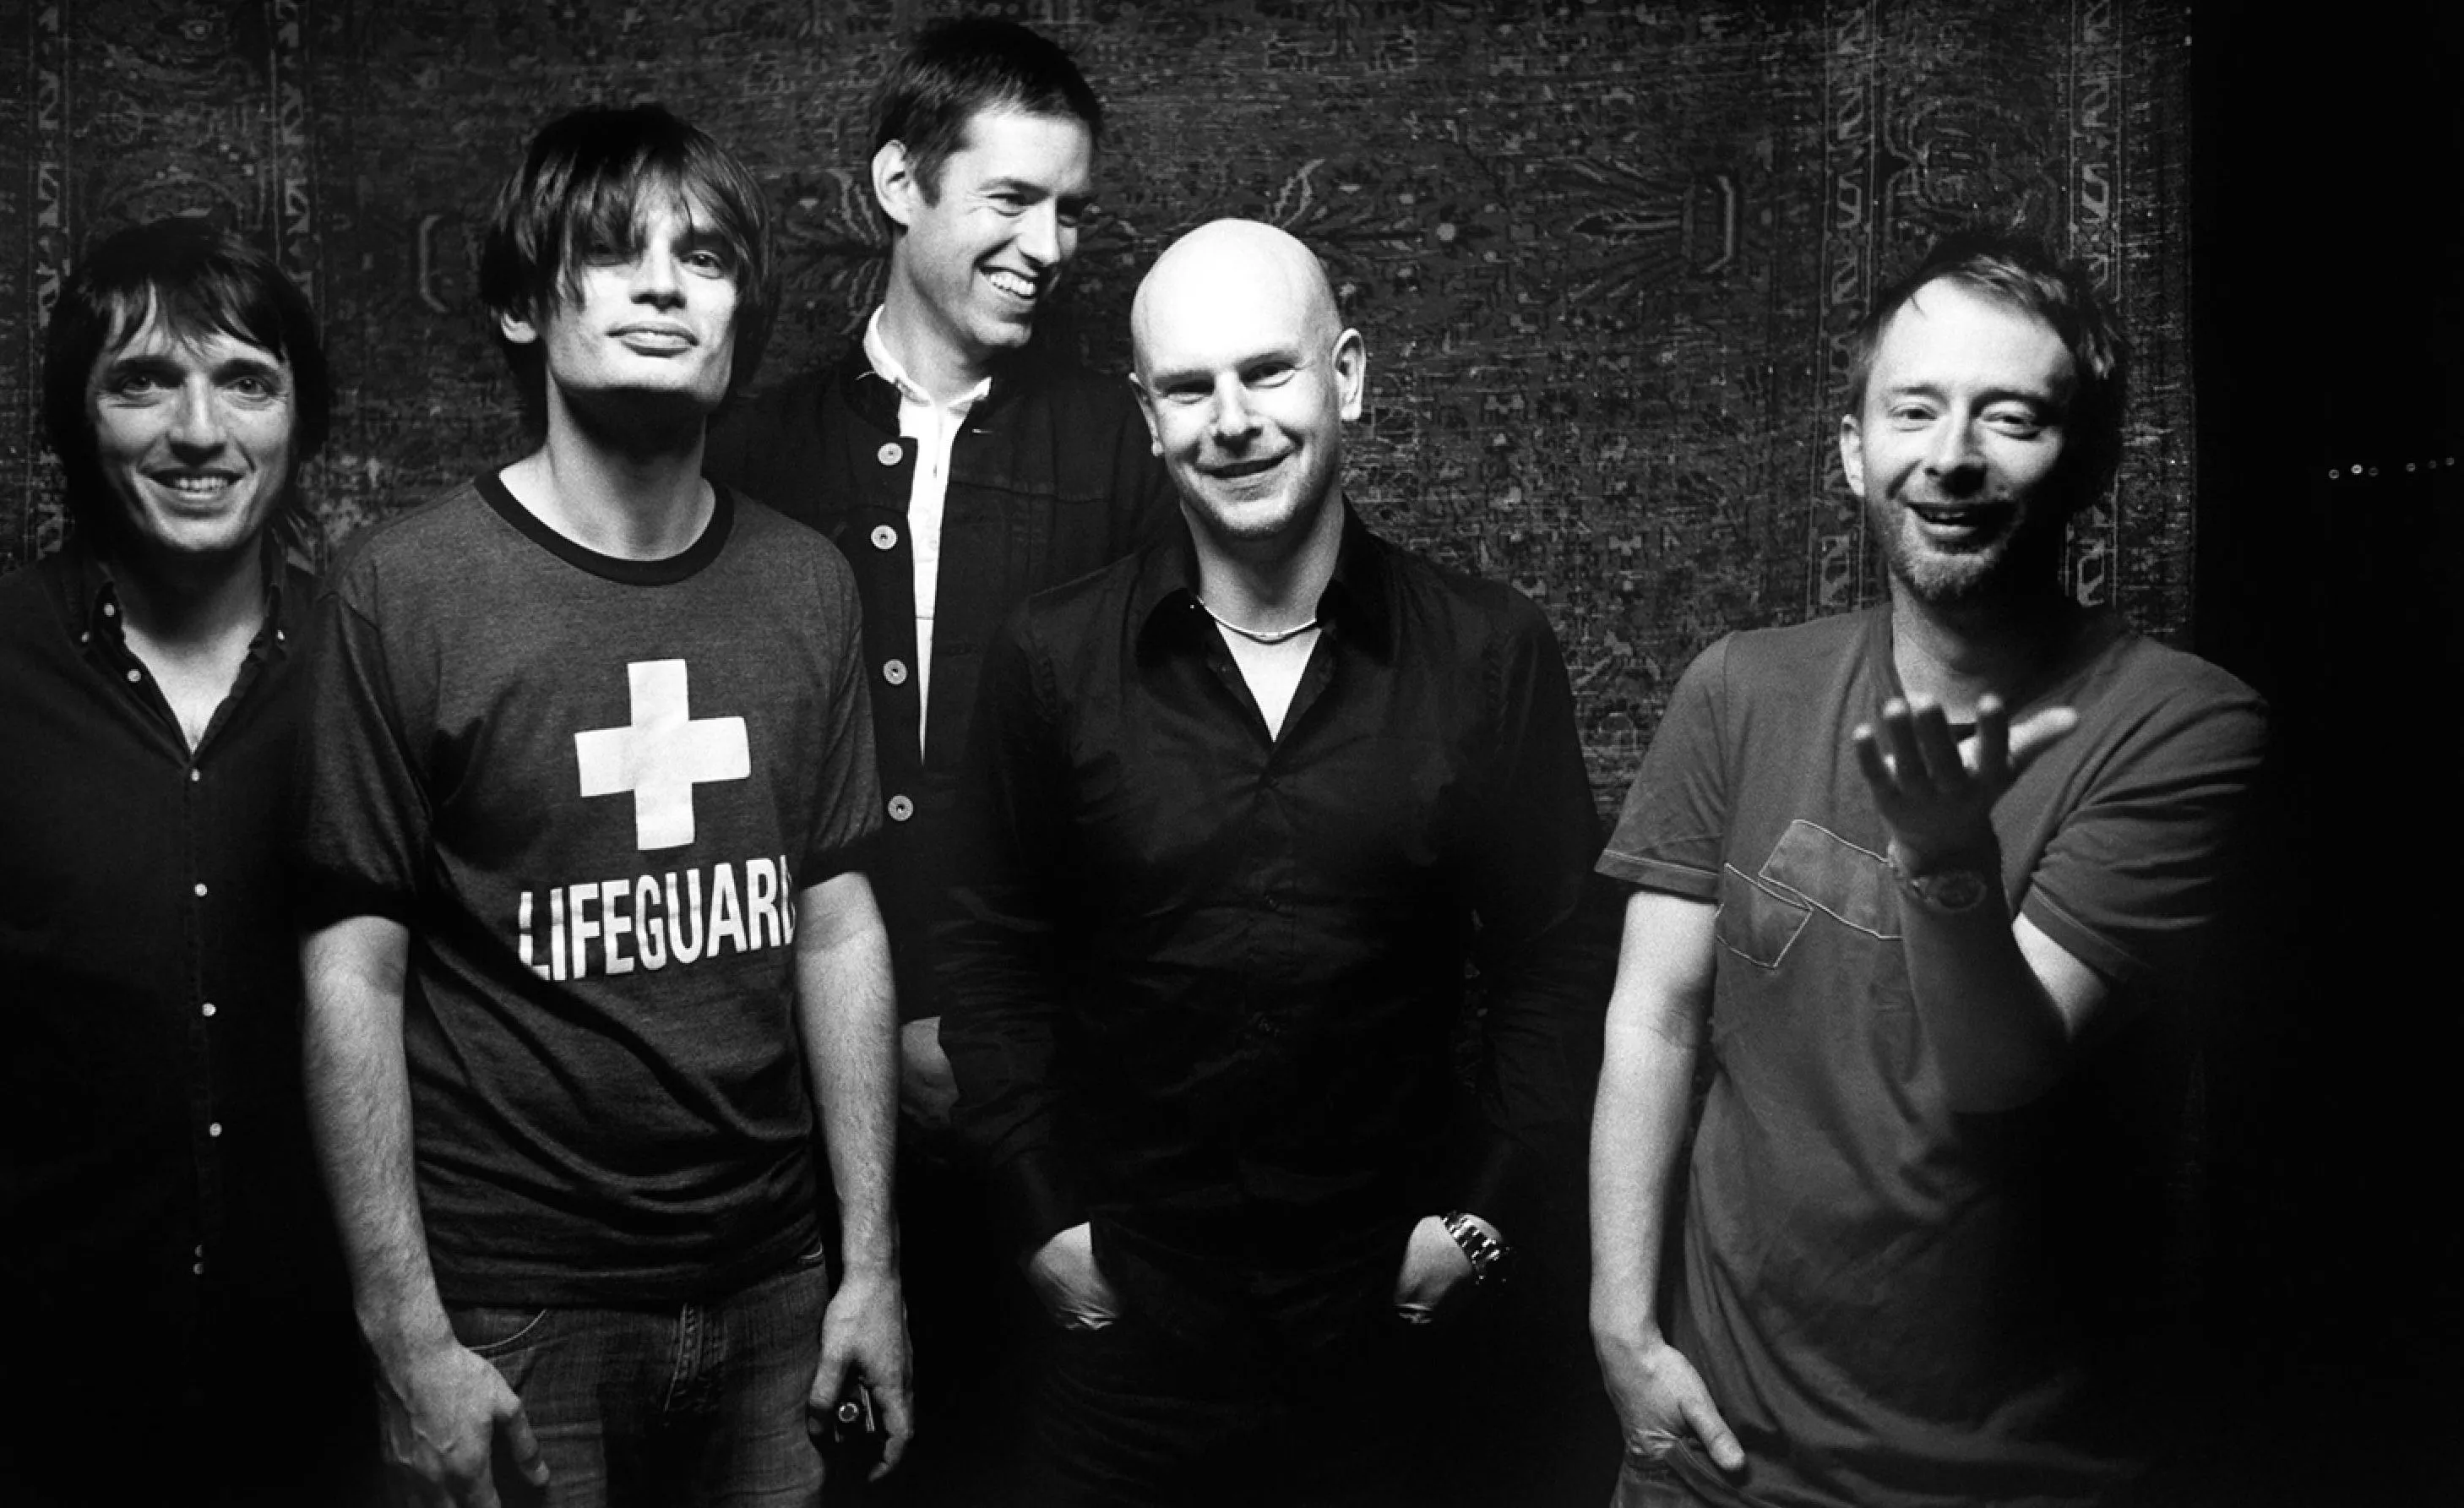 Radiohead the band